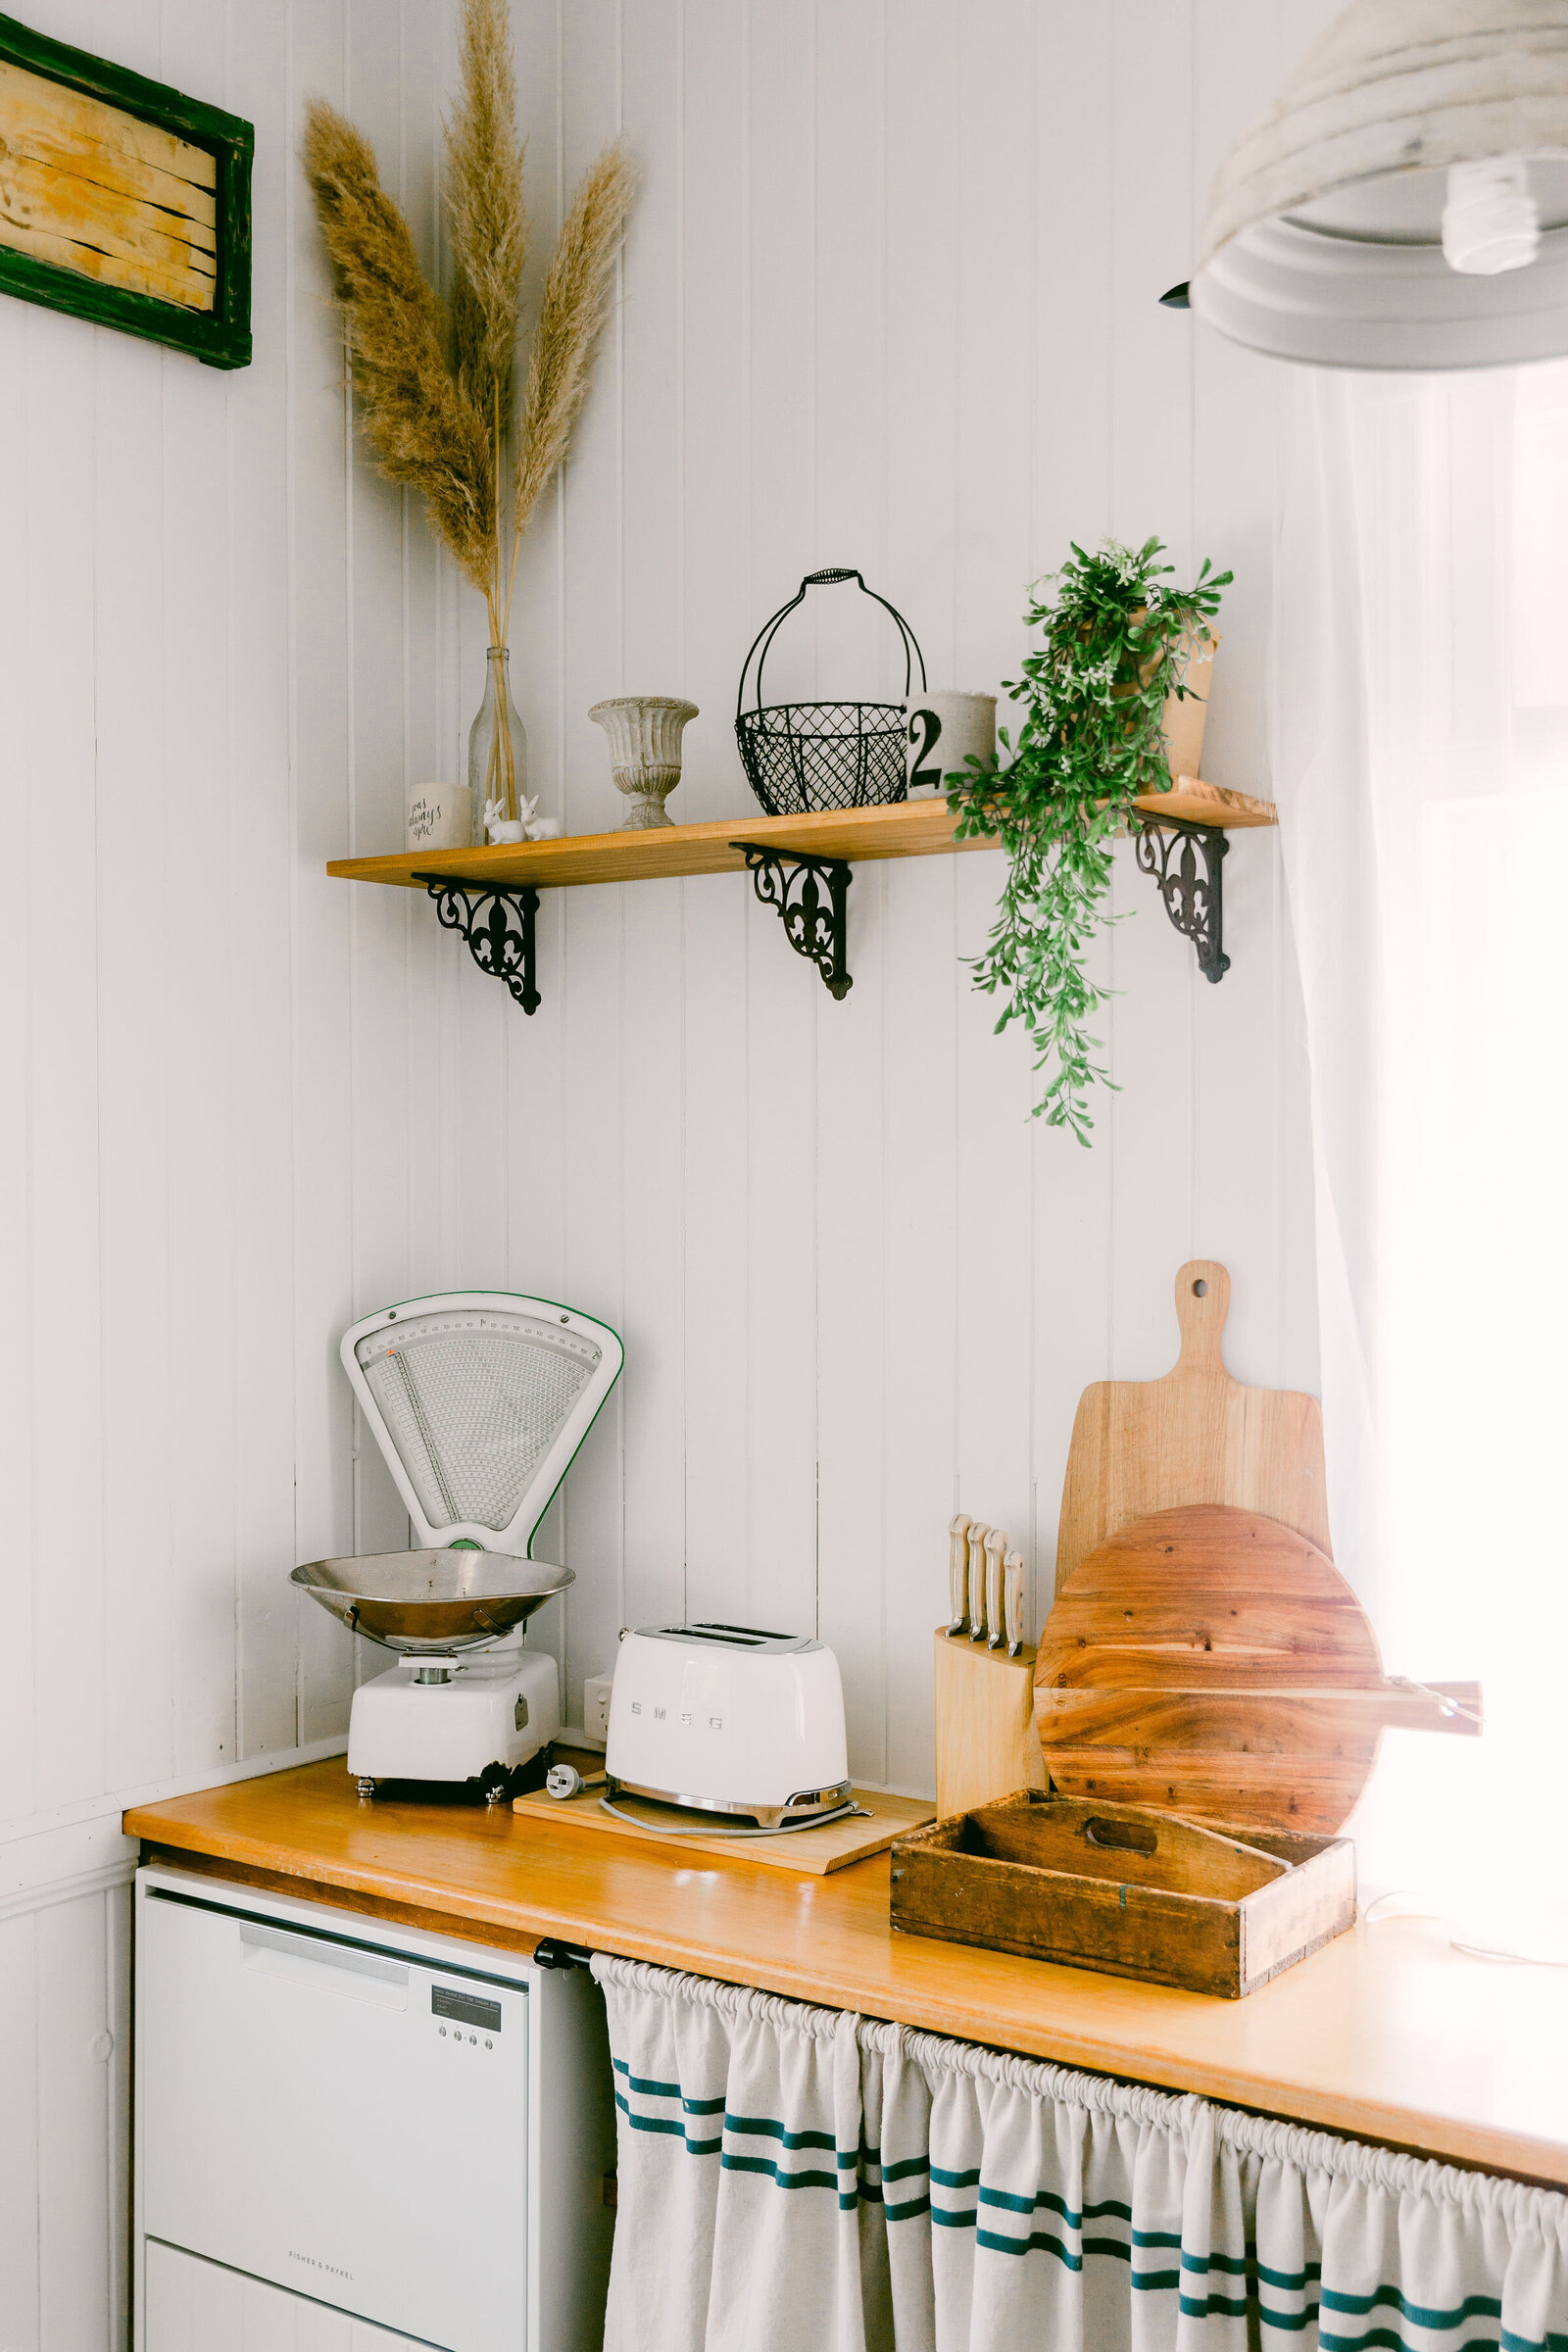 Queensland Australia bungalow Airbnb photography by Chelsea Loren bright white vintage kitchen